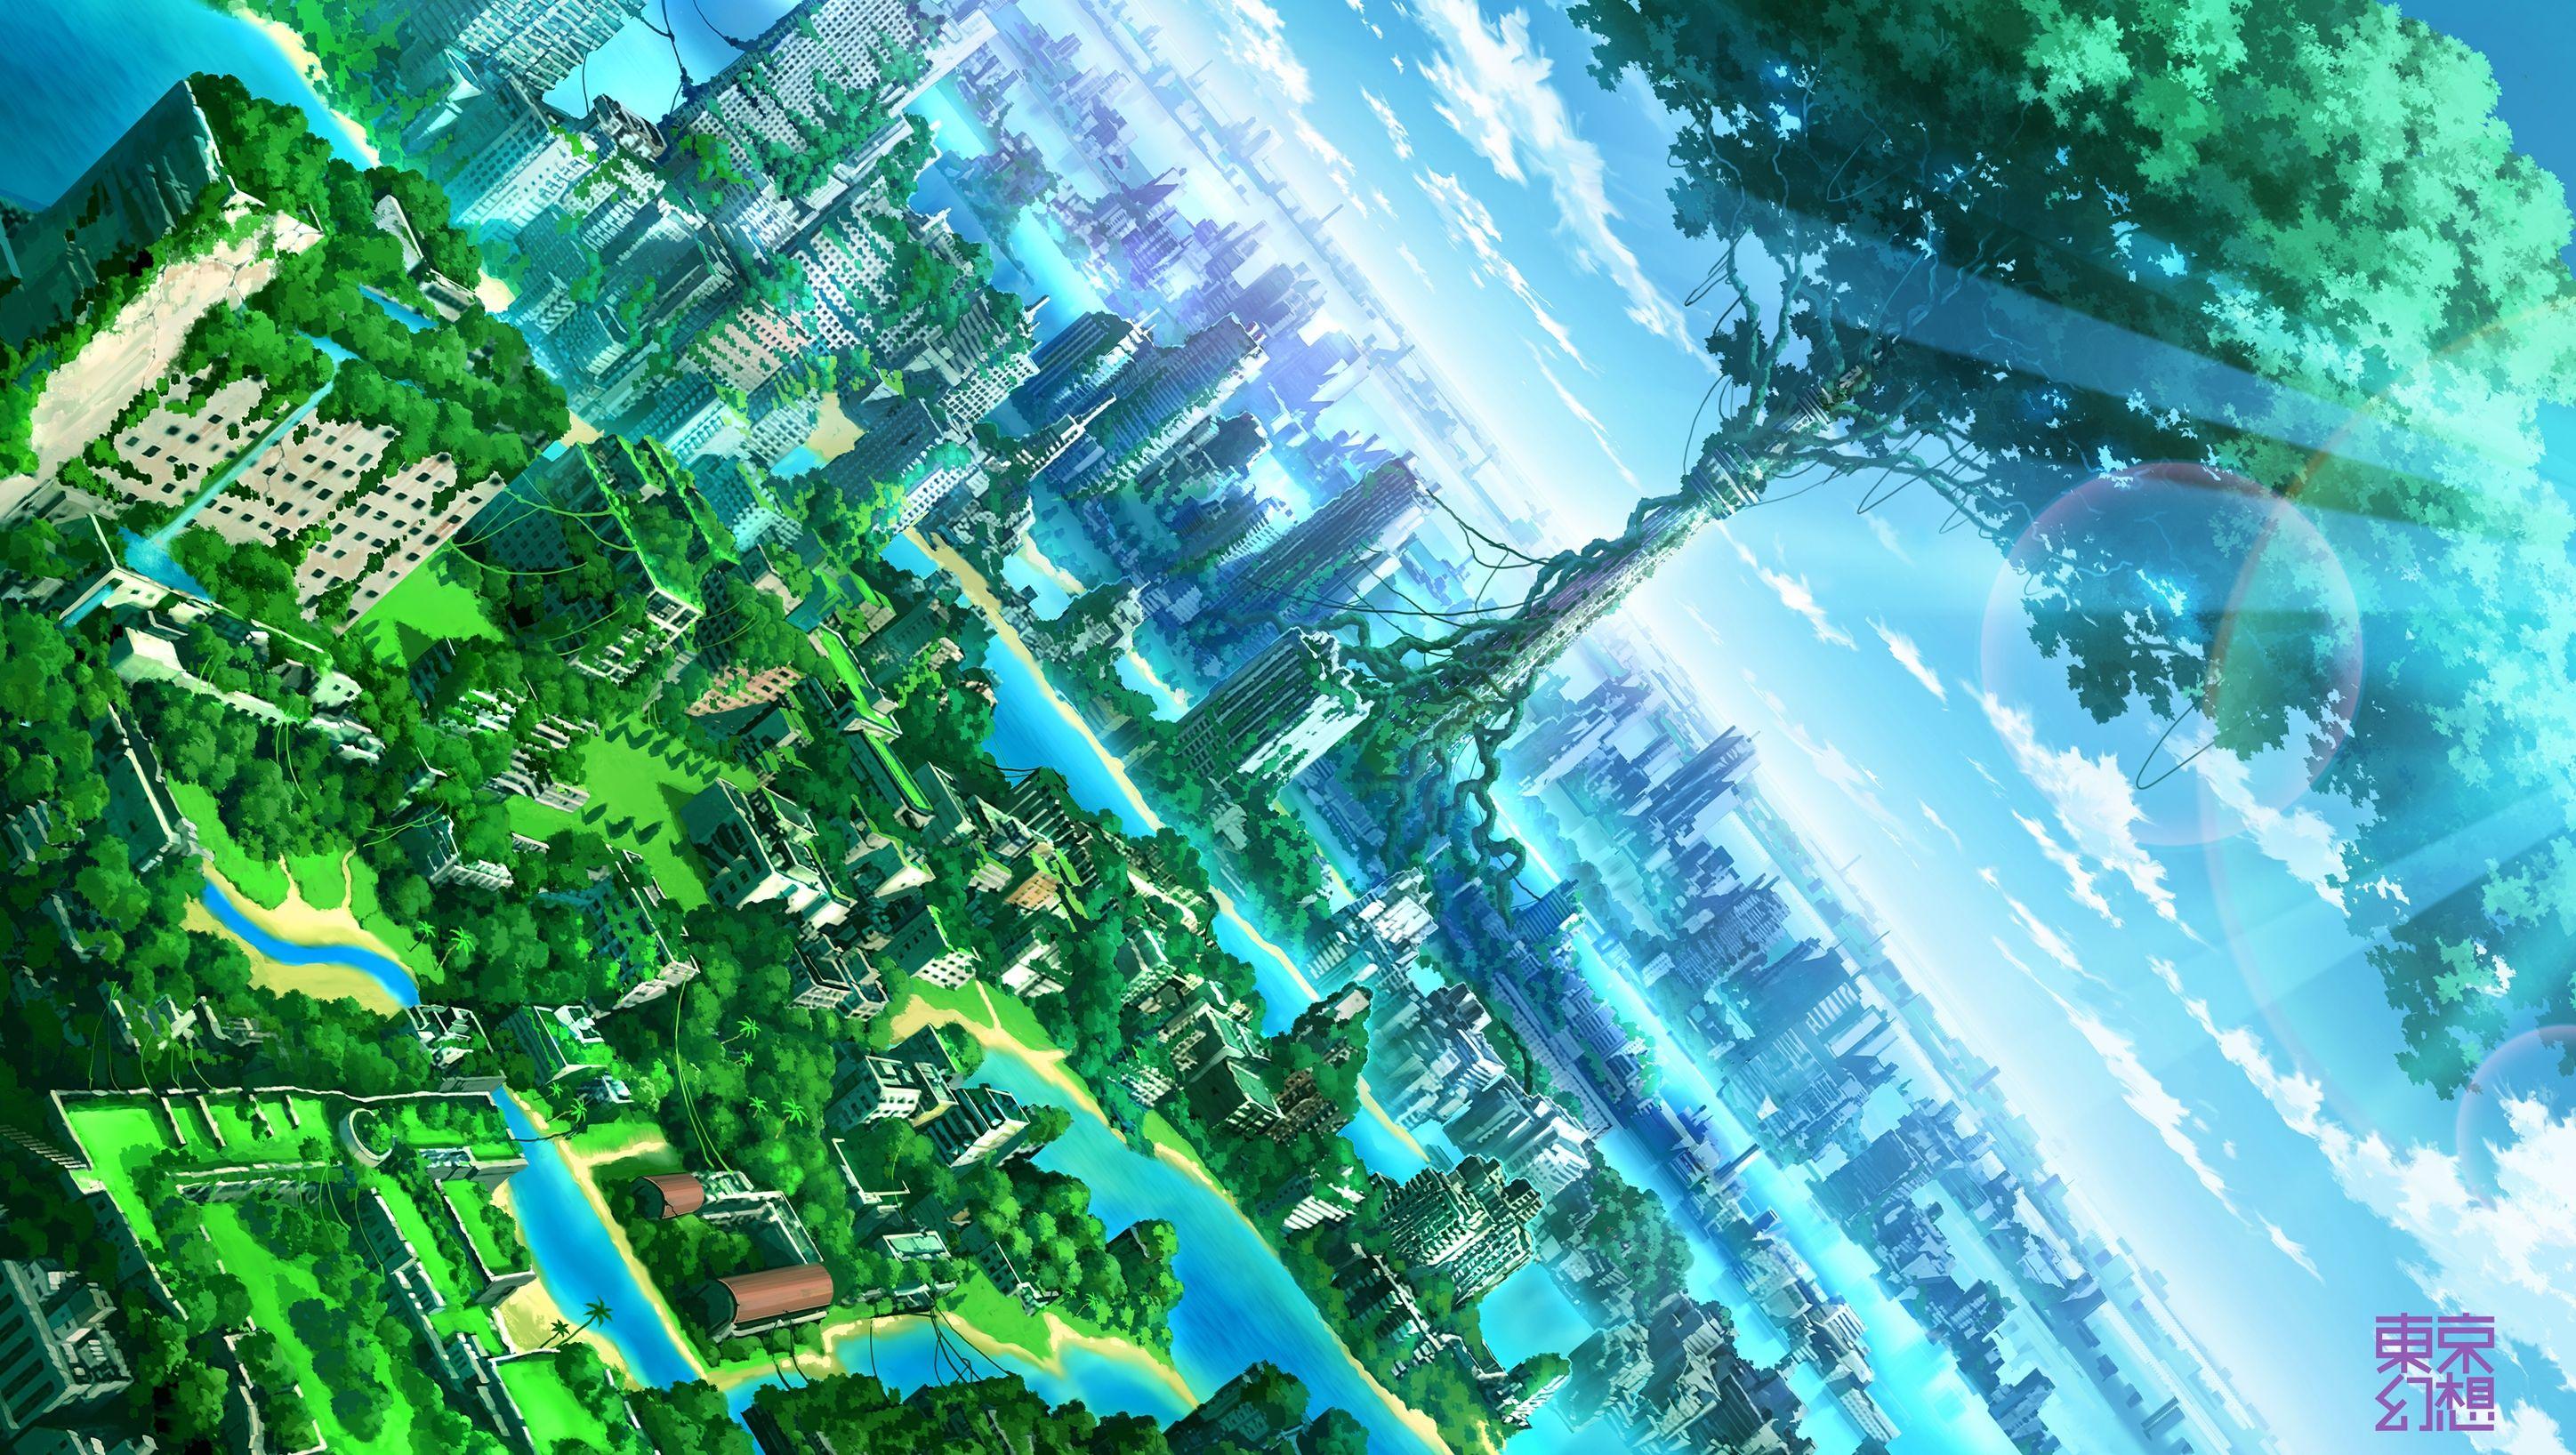 61 Cool Anime Landscape Wallpapers  WallpaperSafari